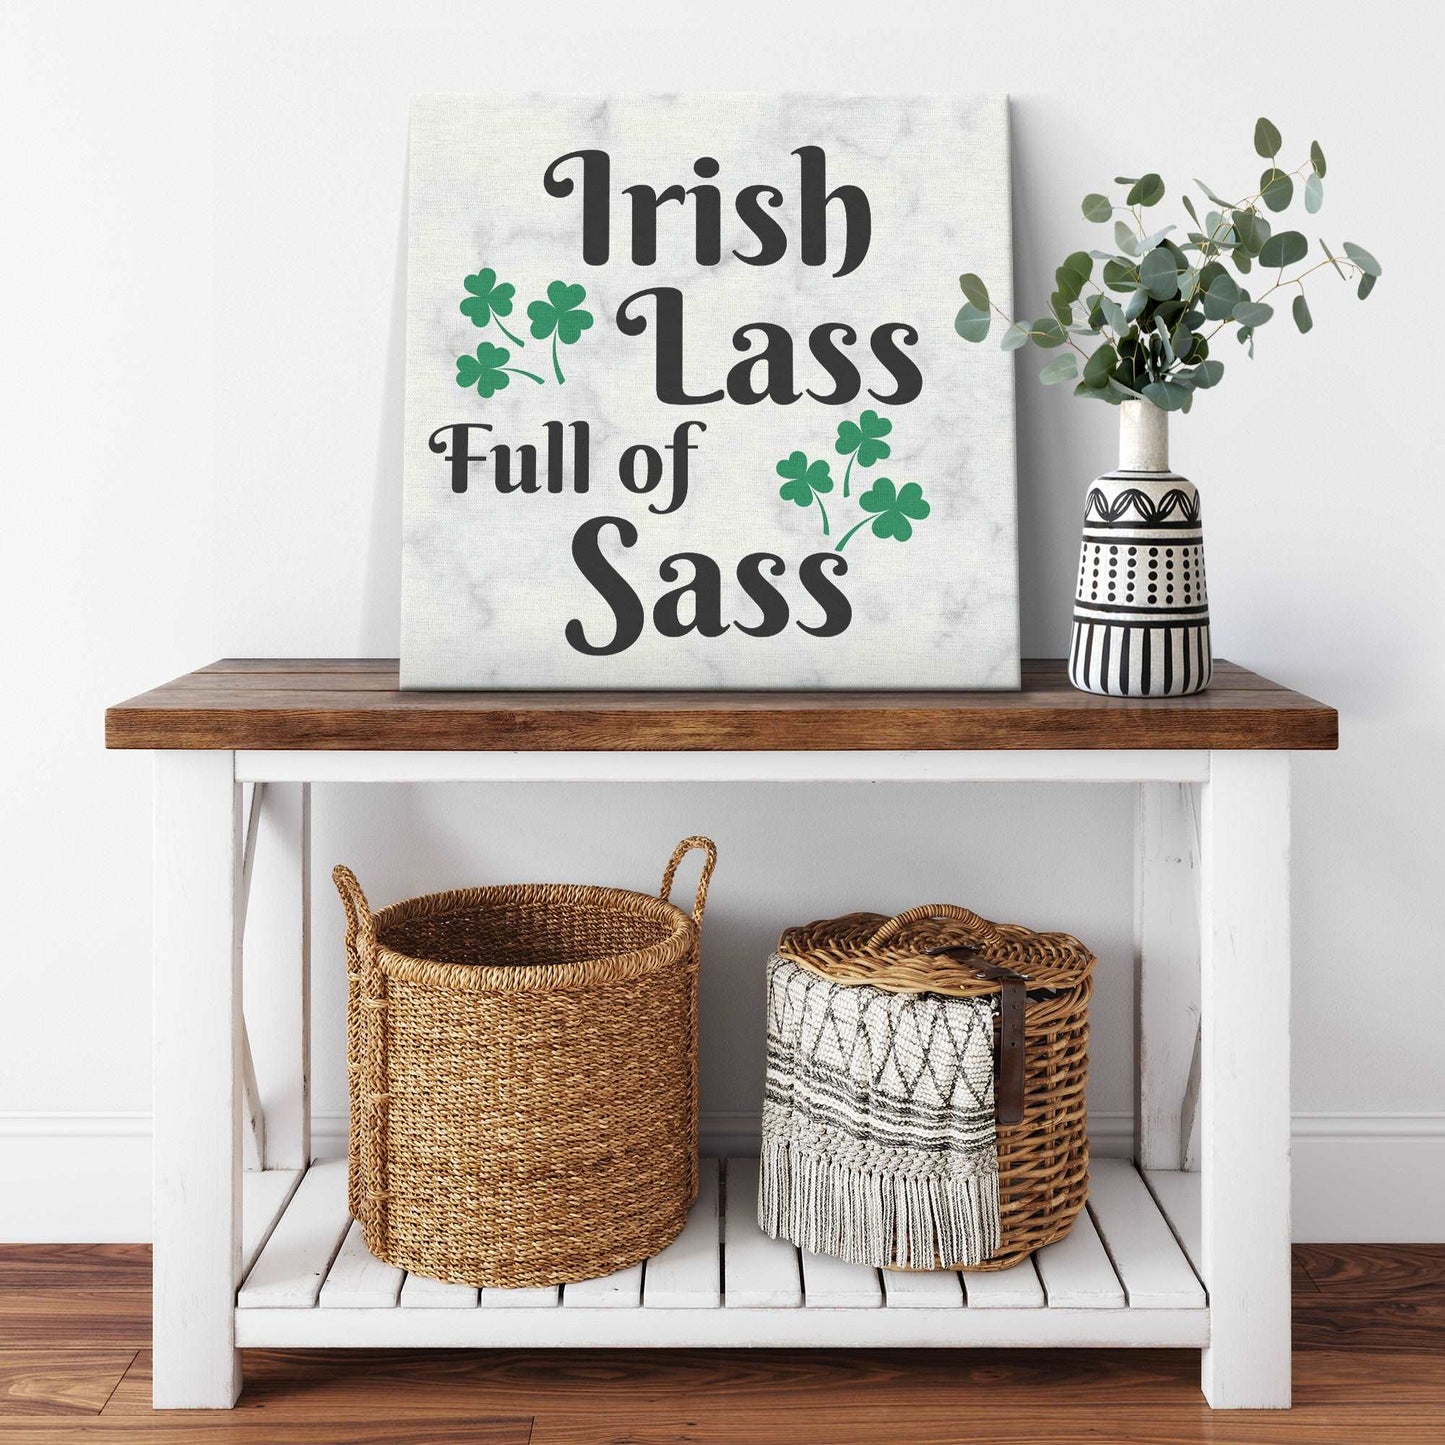 Irish Lass Wall Art, St Patrick's Day Gift, Irish Decor, Custom Irish Sign, Ireland Gift, Saint Patricks Day, St Paddy’s Decor